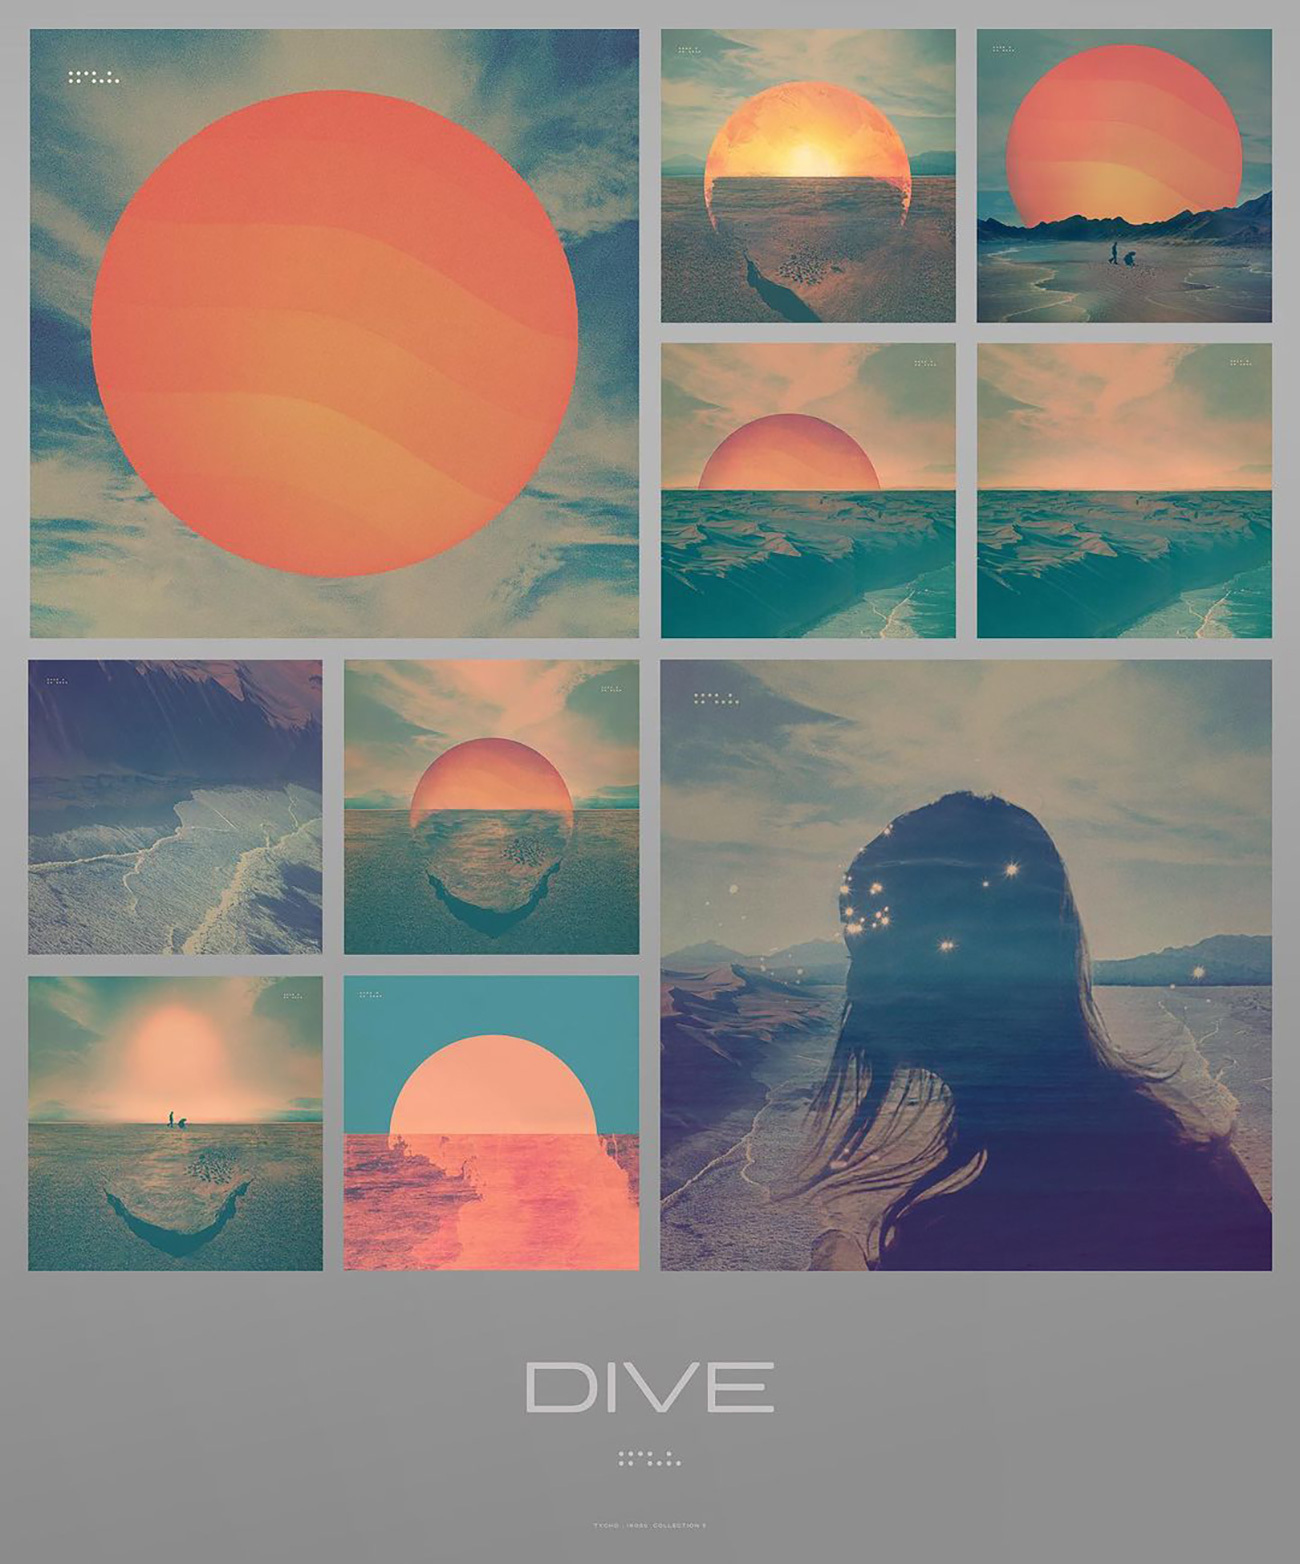 Dive Digital Art Collection